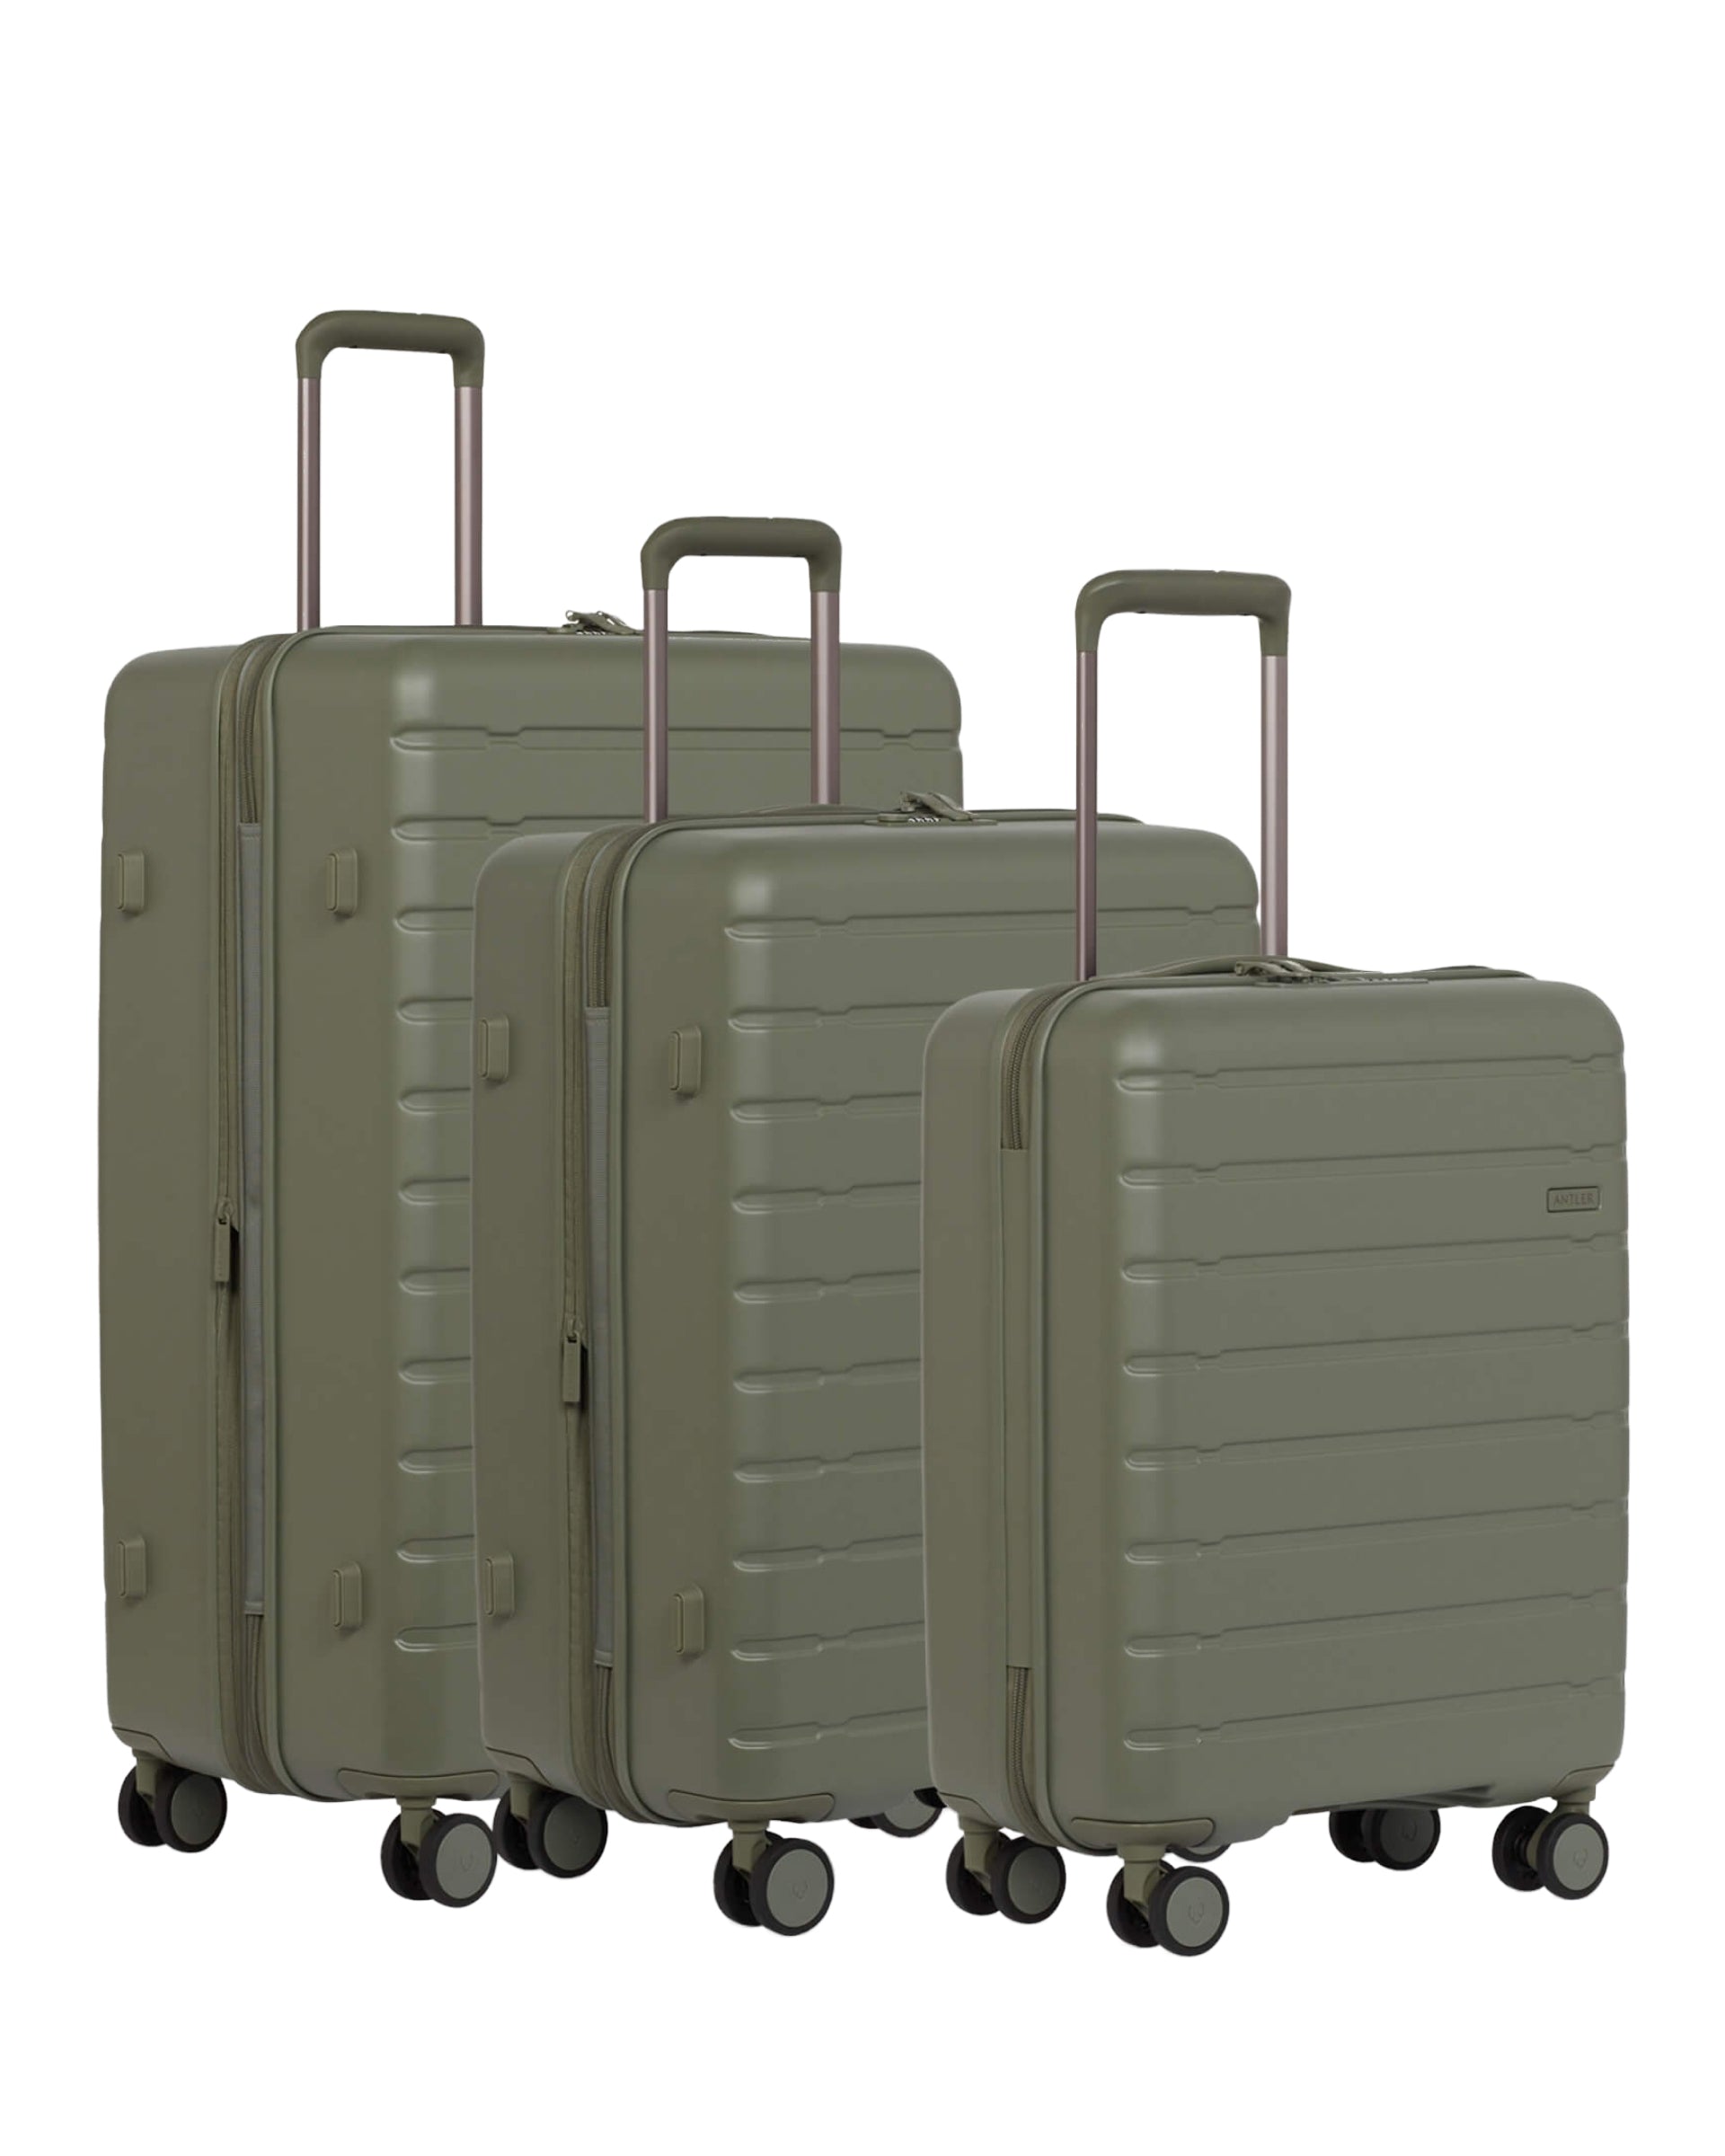 View Antler Stamford 20 Suitcase Set In Field Green information